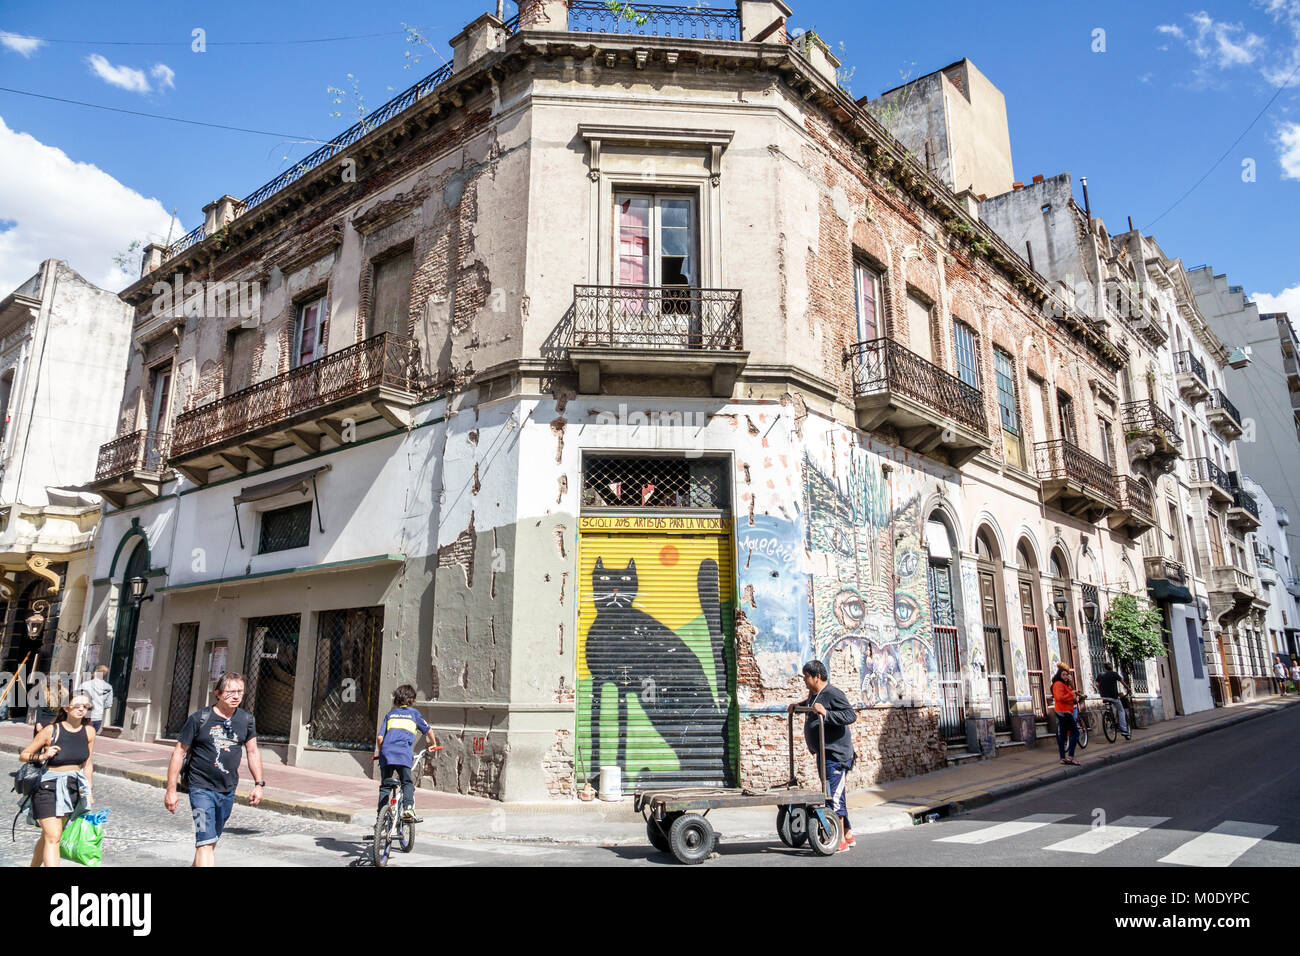 Buenos Aires Argentina,San Telmo,historic center,building,dilapidated,mural,street art,graffiti,corner,pedestrians,Black cat,Hispanic ARG171119332 Stock Photo